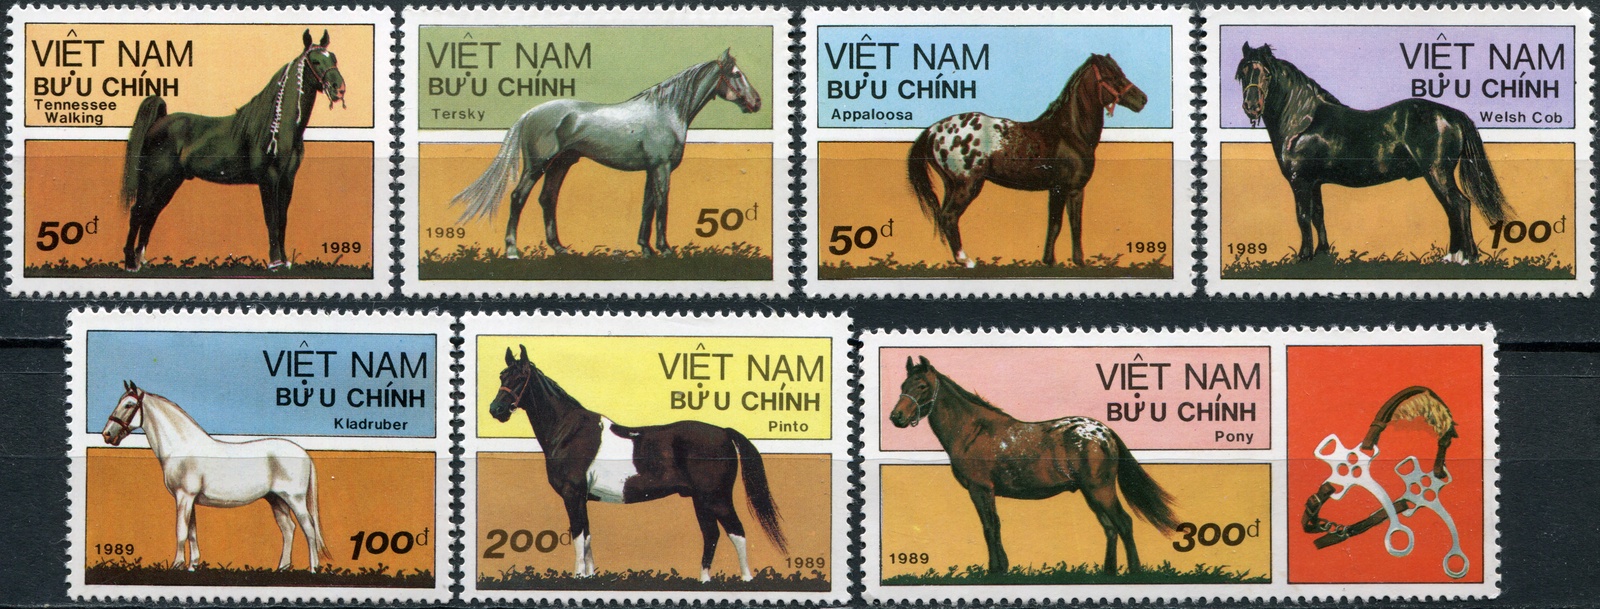 Лошадка марка. Марки лошади Вьетнам 1989. Марки с породами лошадей. Марка с лошадкой. Почтовые марки Вьетнама по годам.